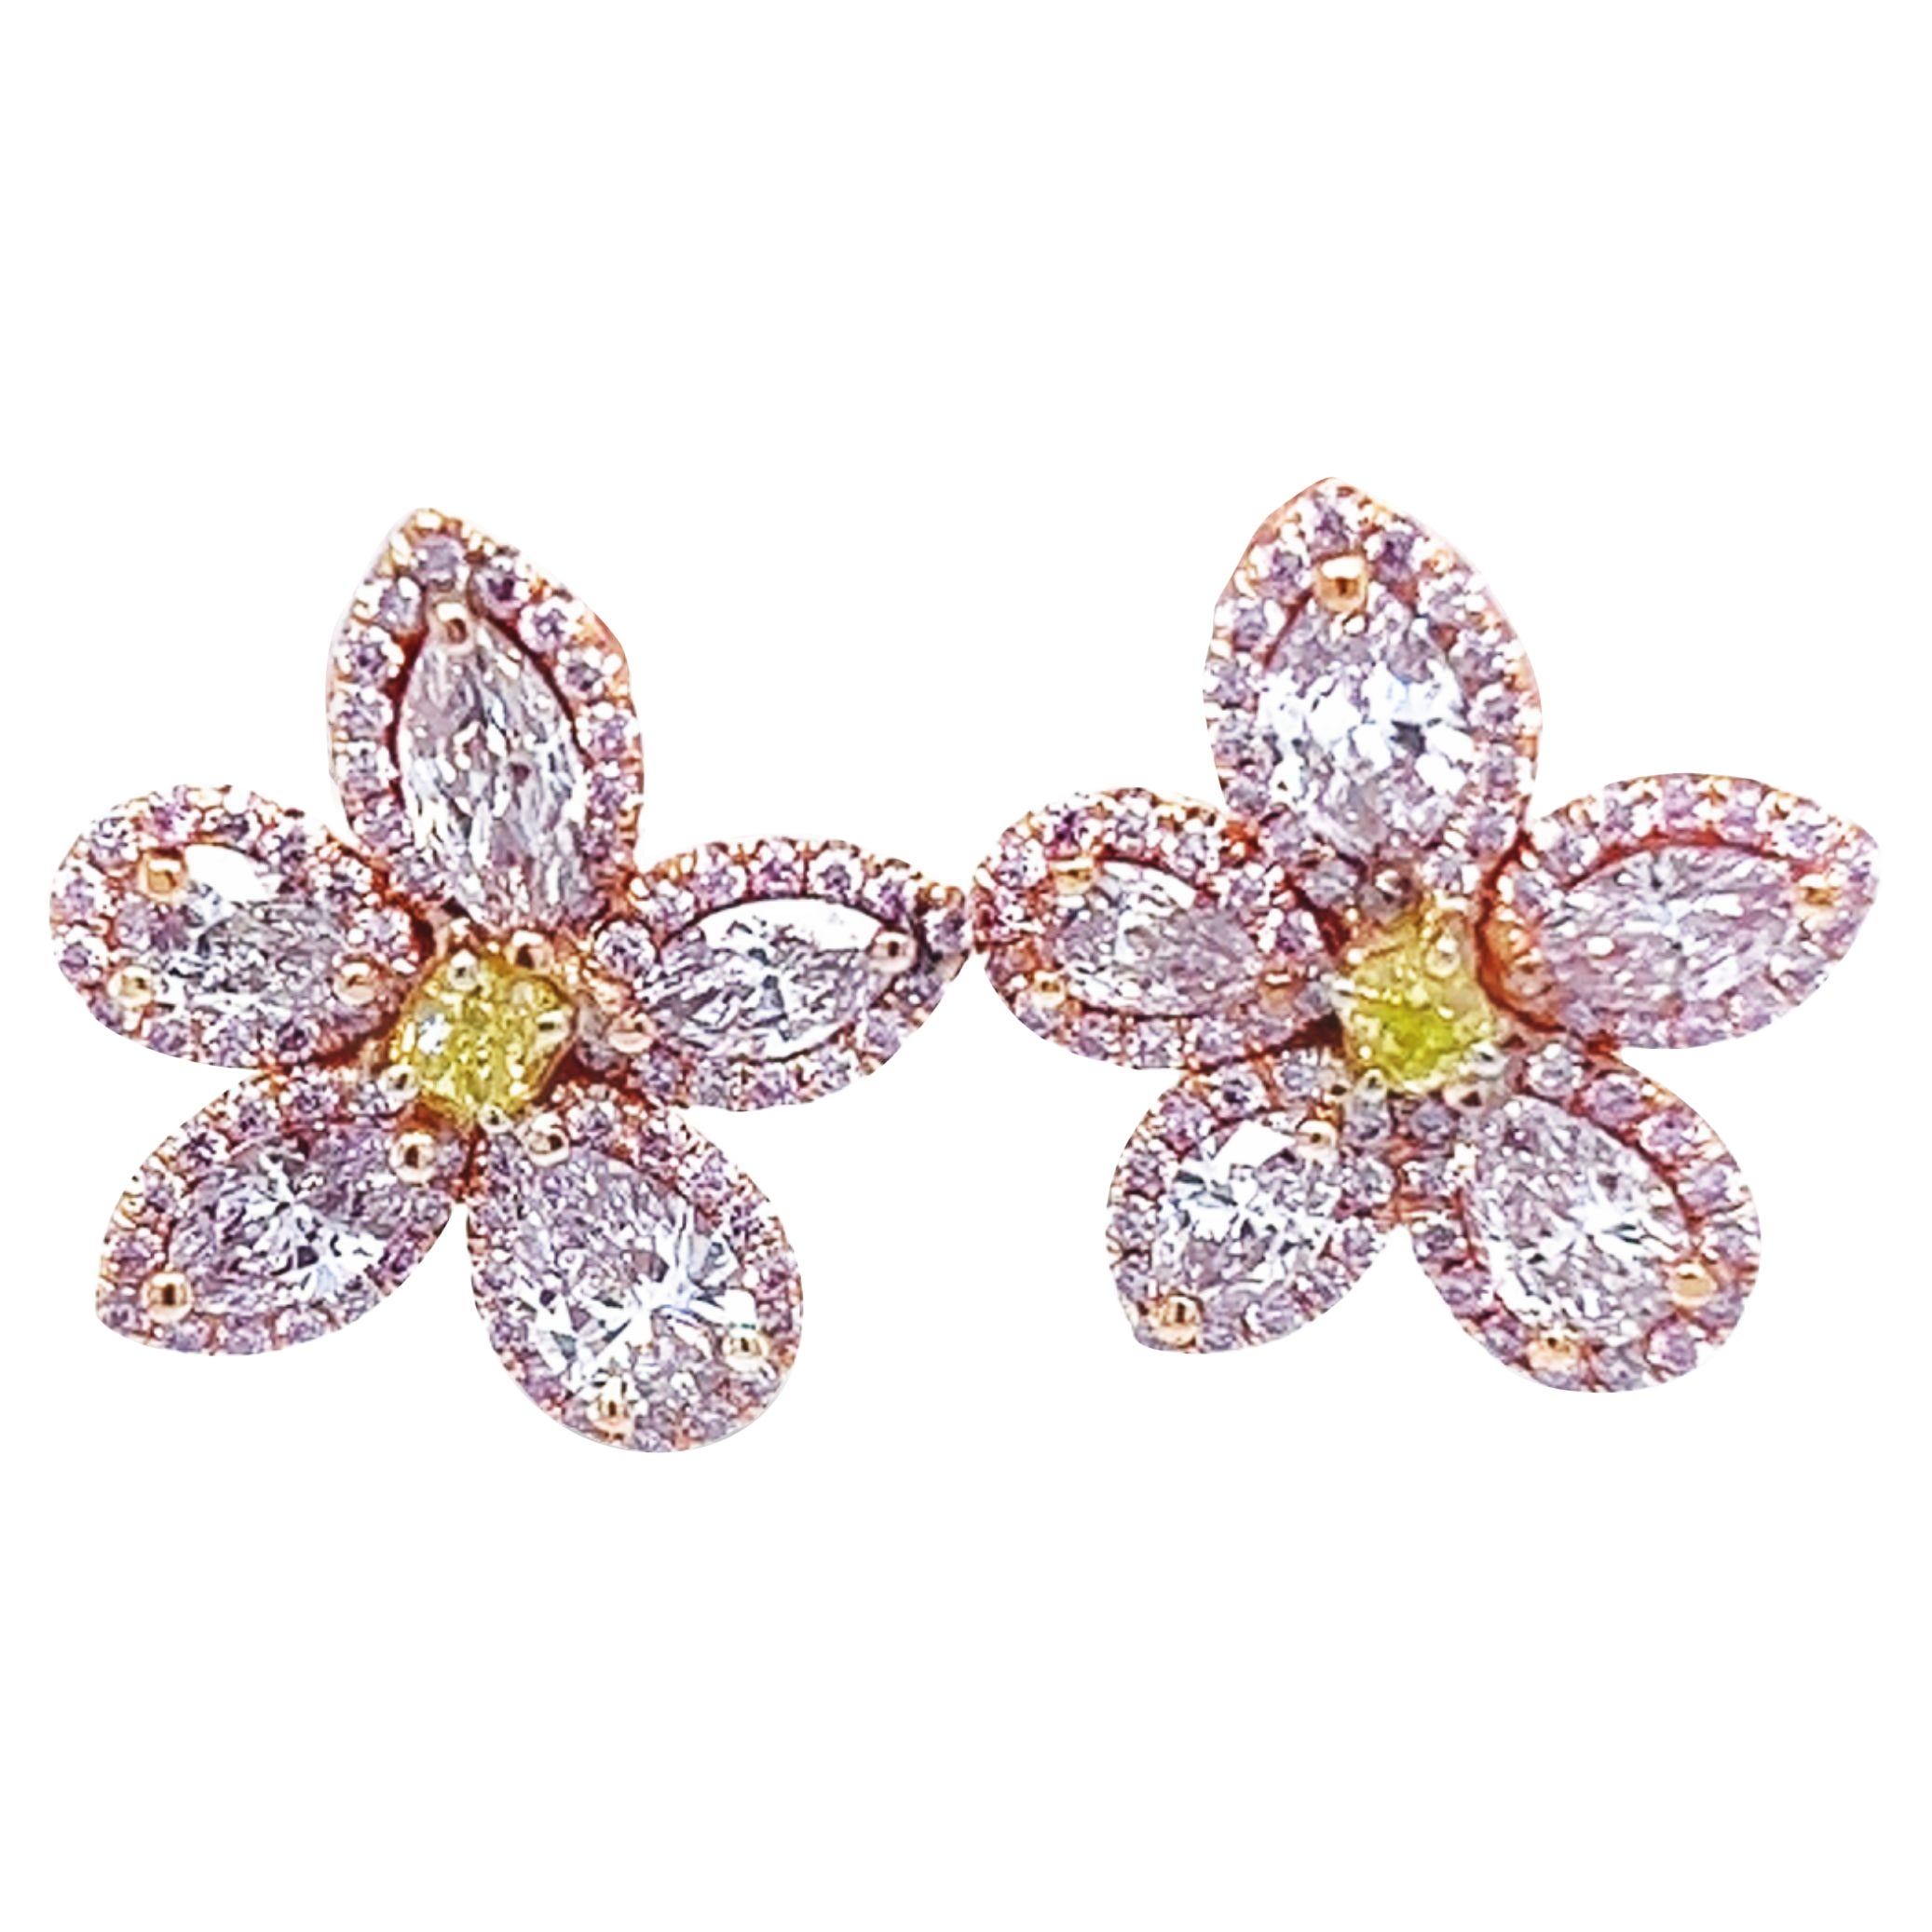 David Rosenberg 2.35 Carat Pink & Green GIA Flower Diamond Stud Earring